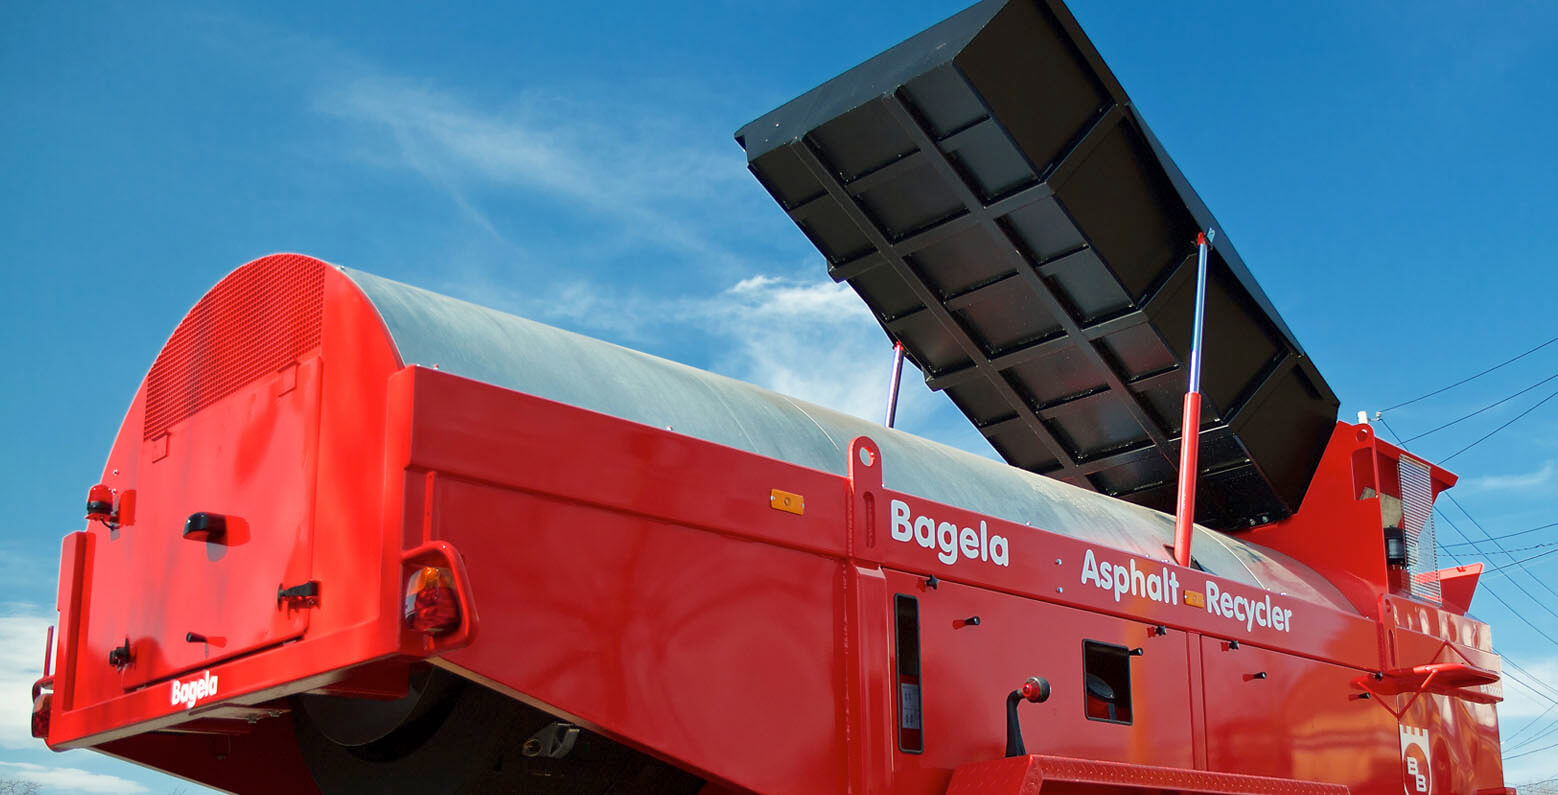 bagela provide the leading recycled asphalt equipment on the market